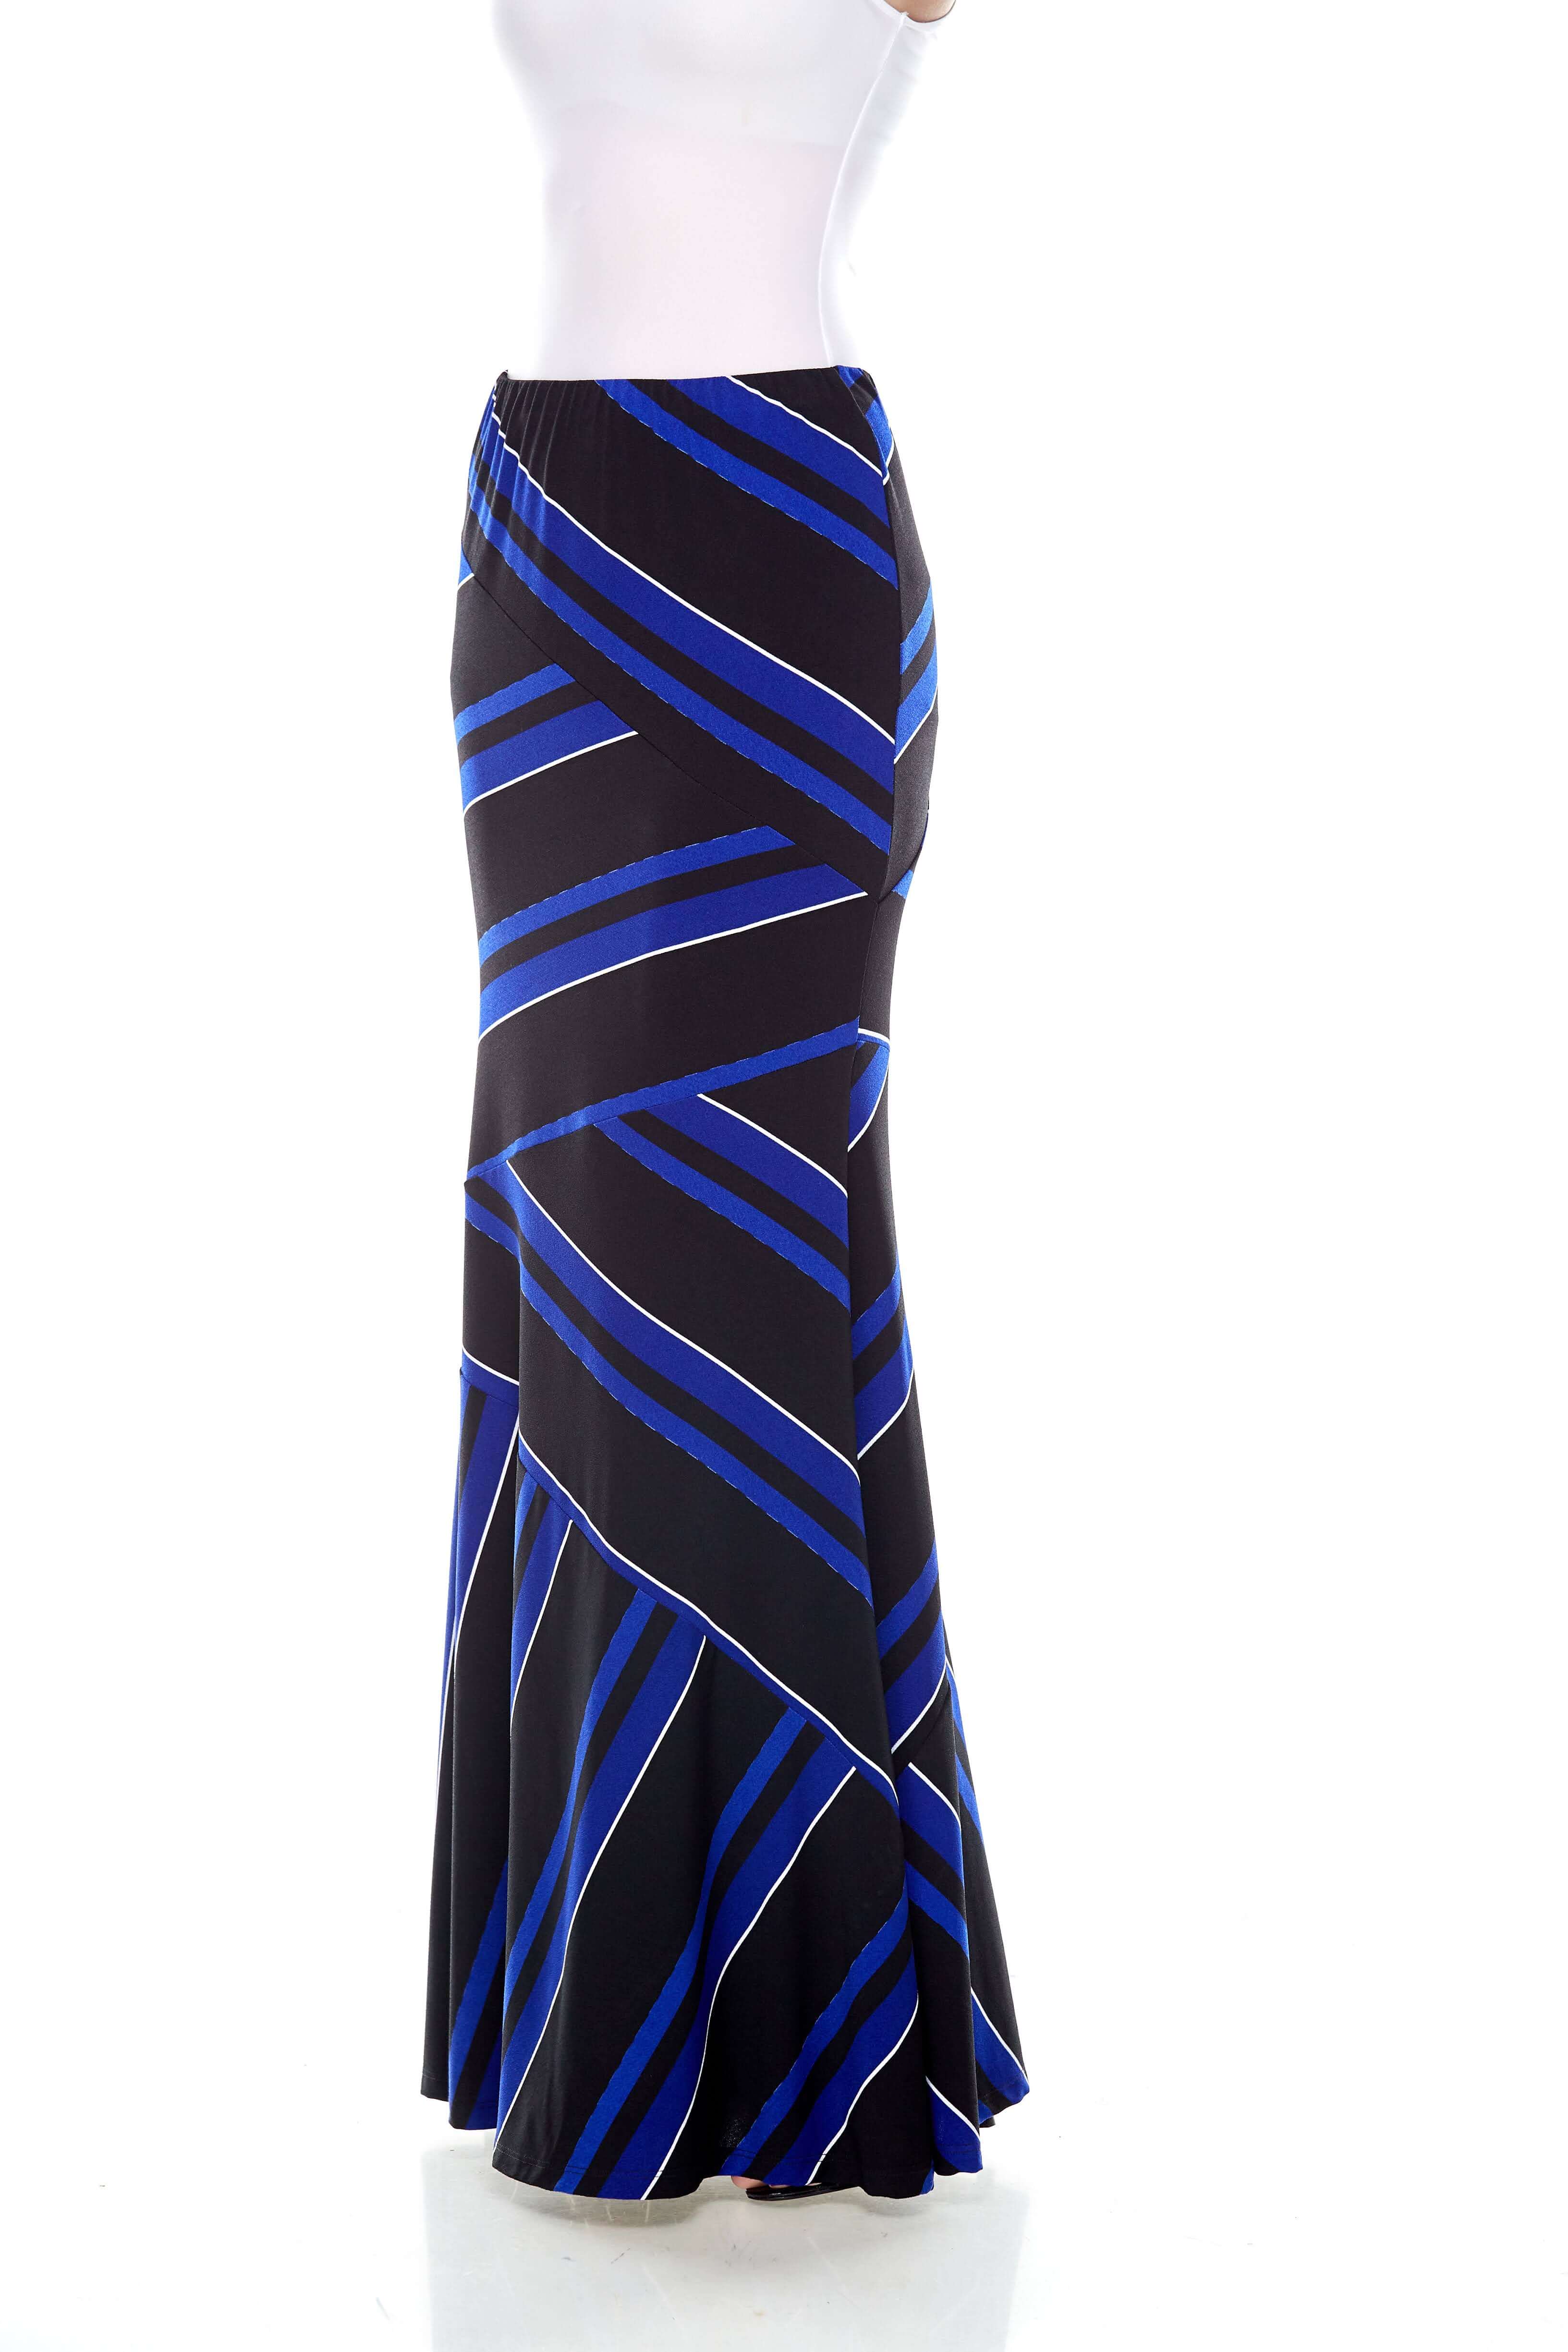 Blue-Black Striped Mermaid Skirt (4)